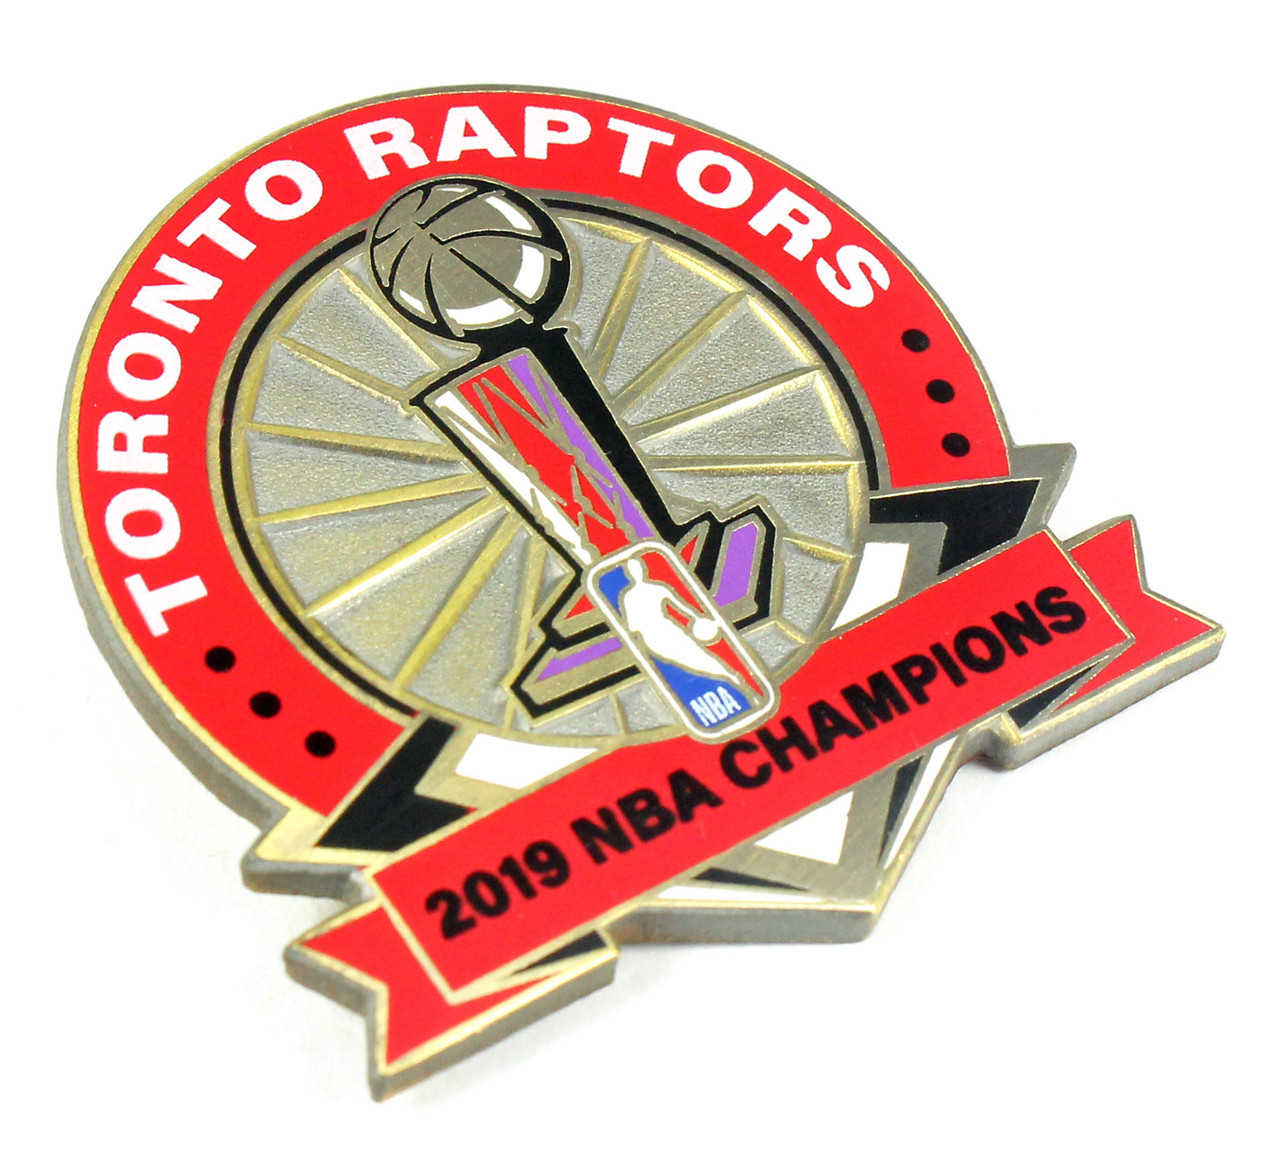 Toronto Raptors receive 2019 NBA Championship rings on opening night | NBA .com